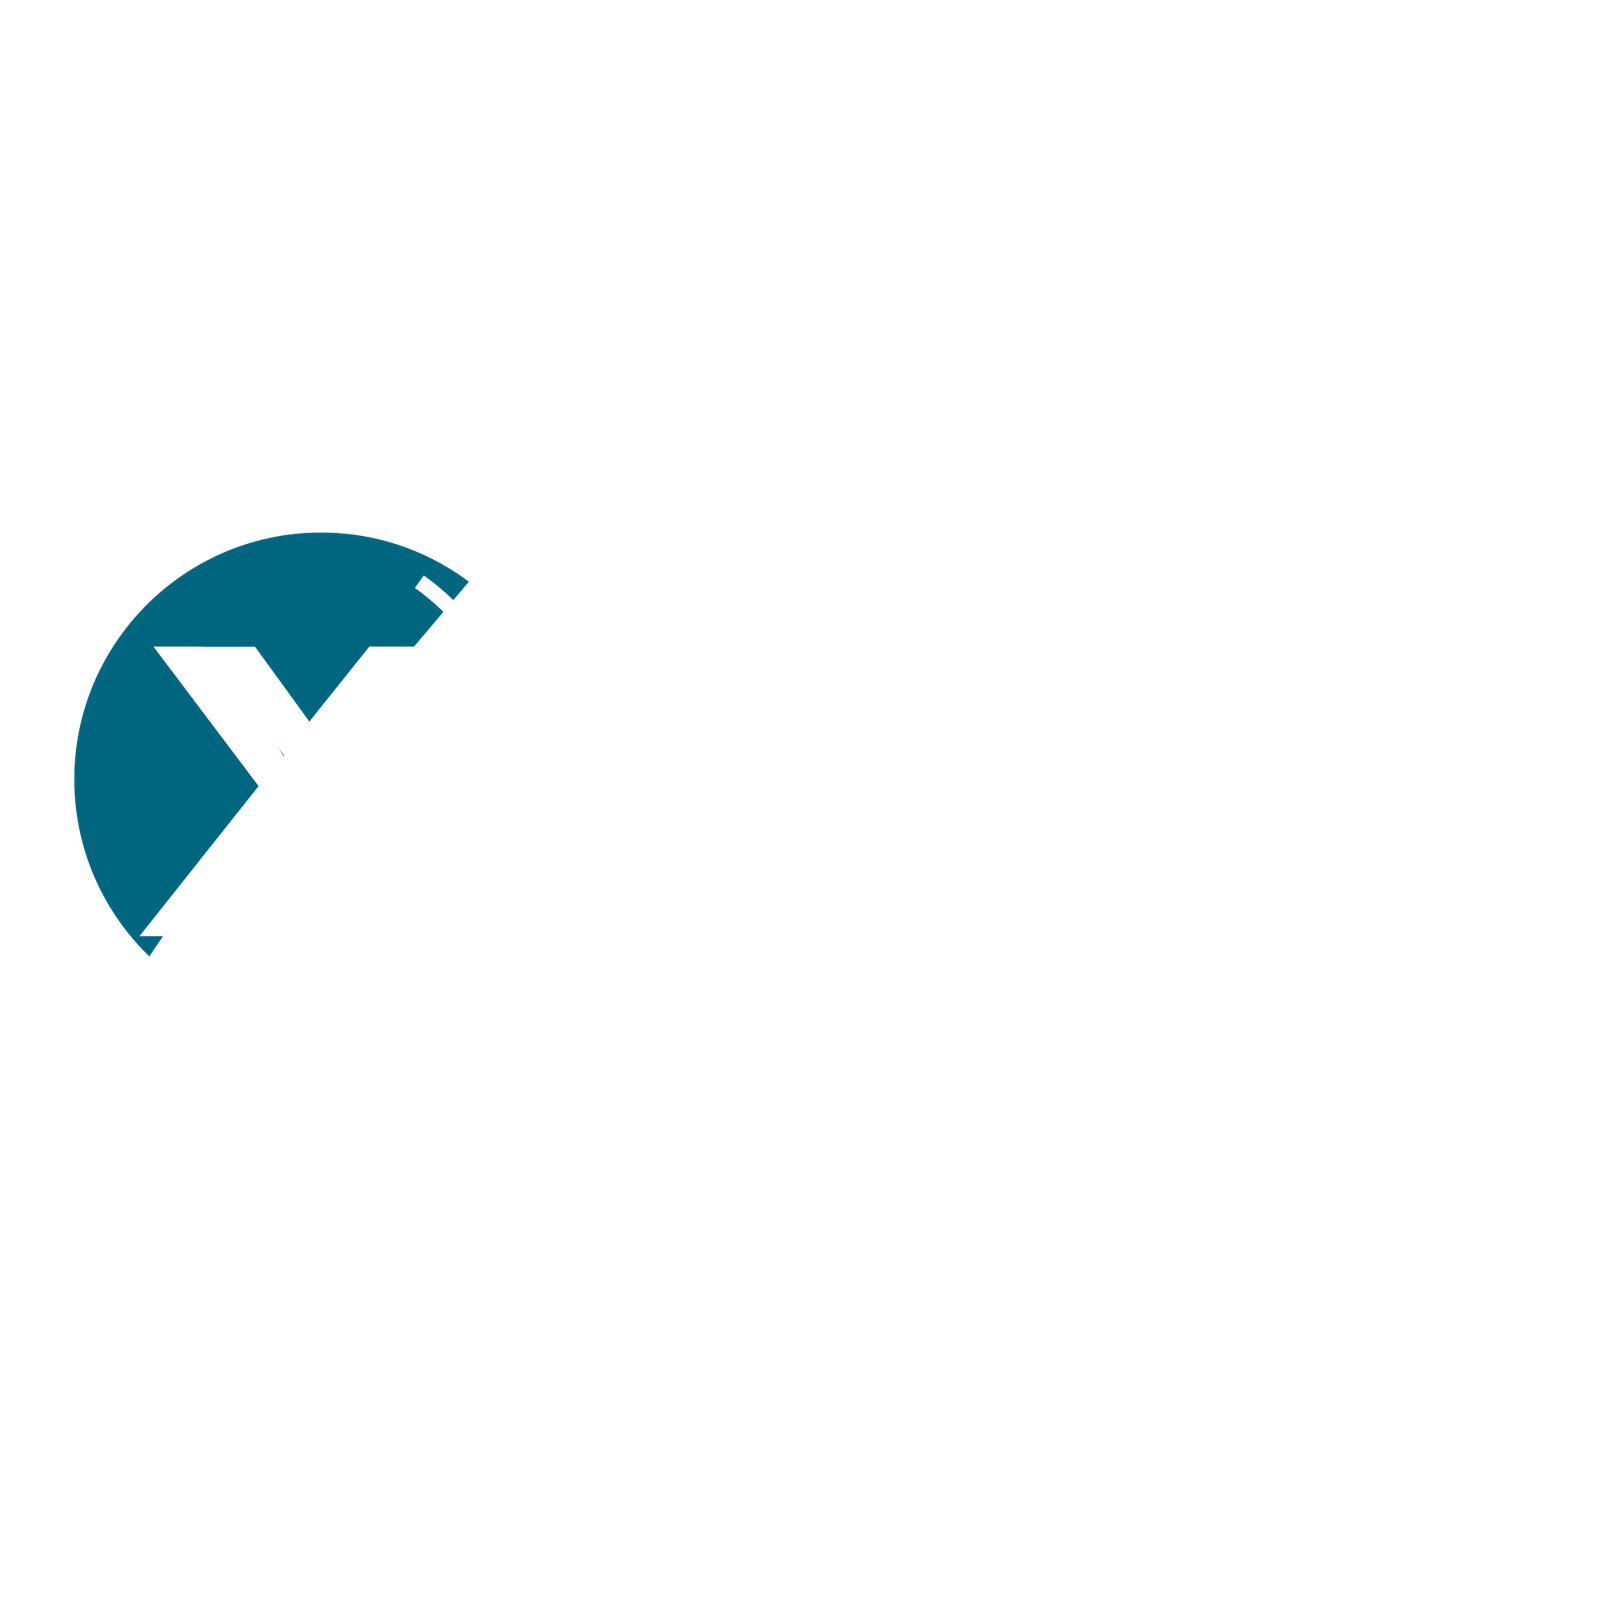 New Dexterity